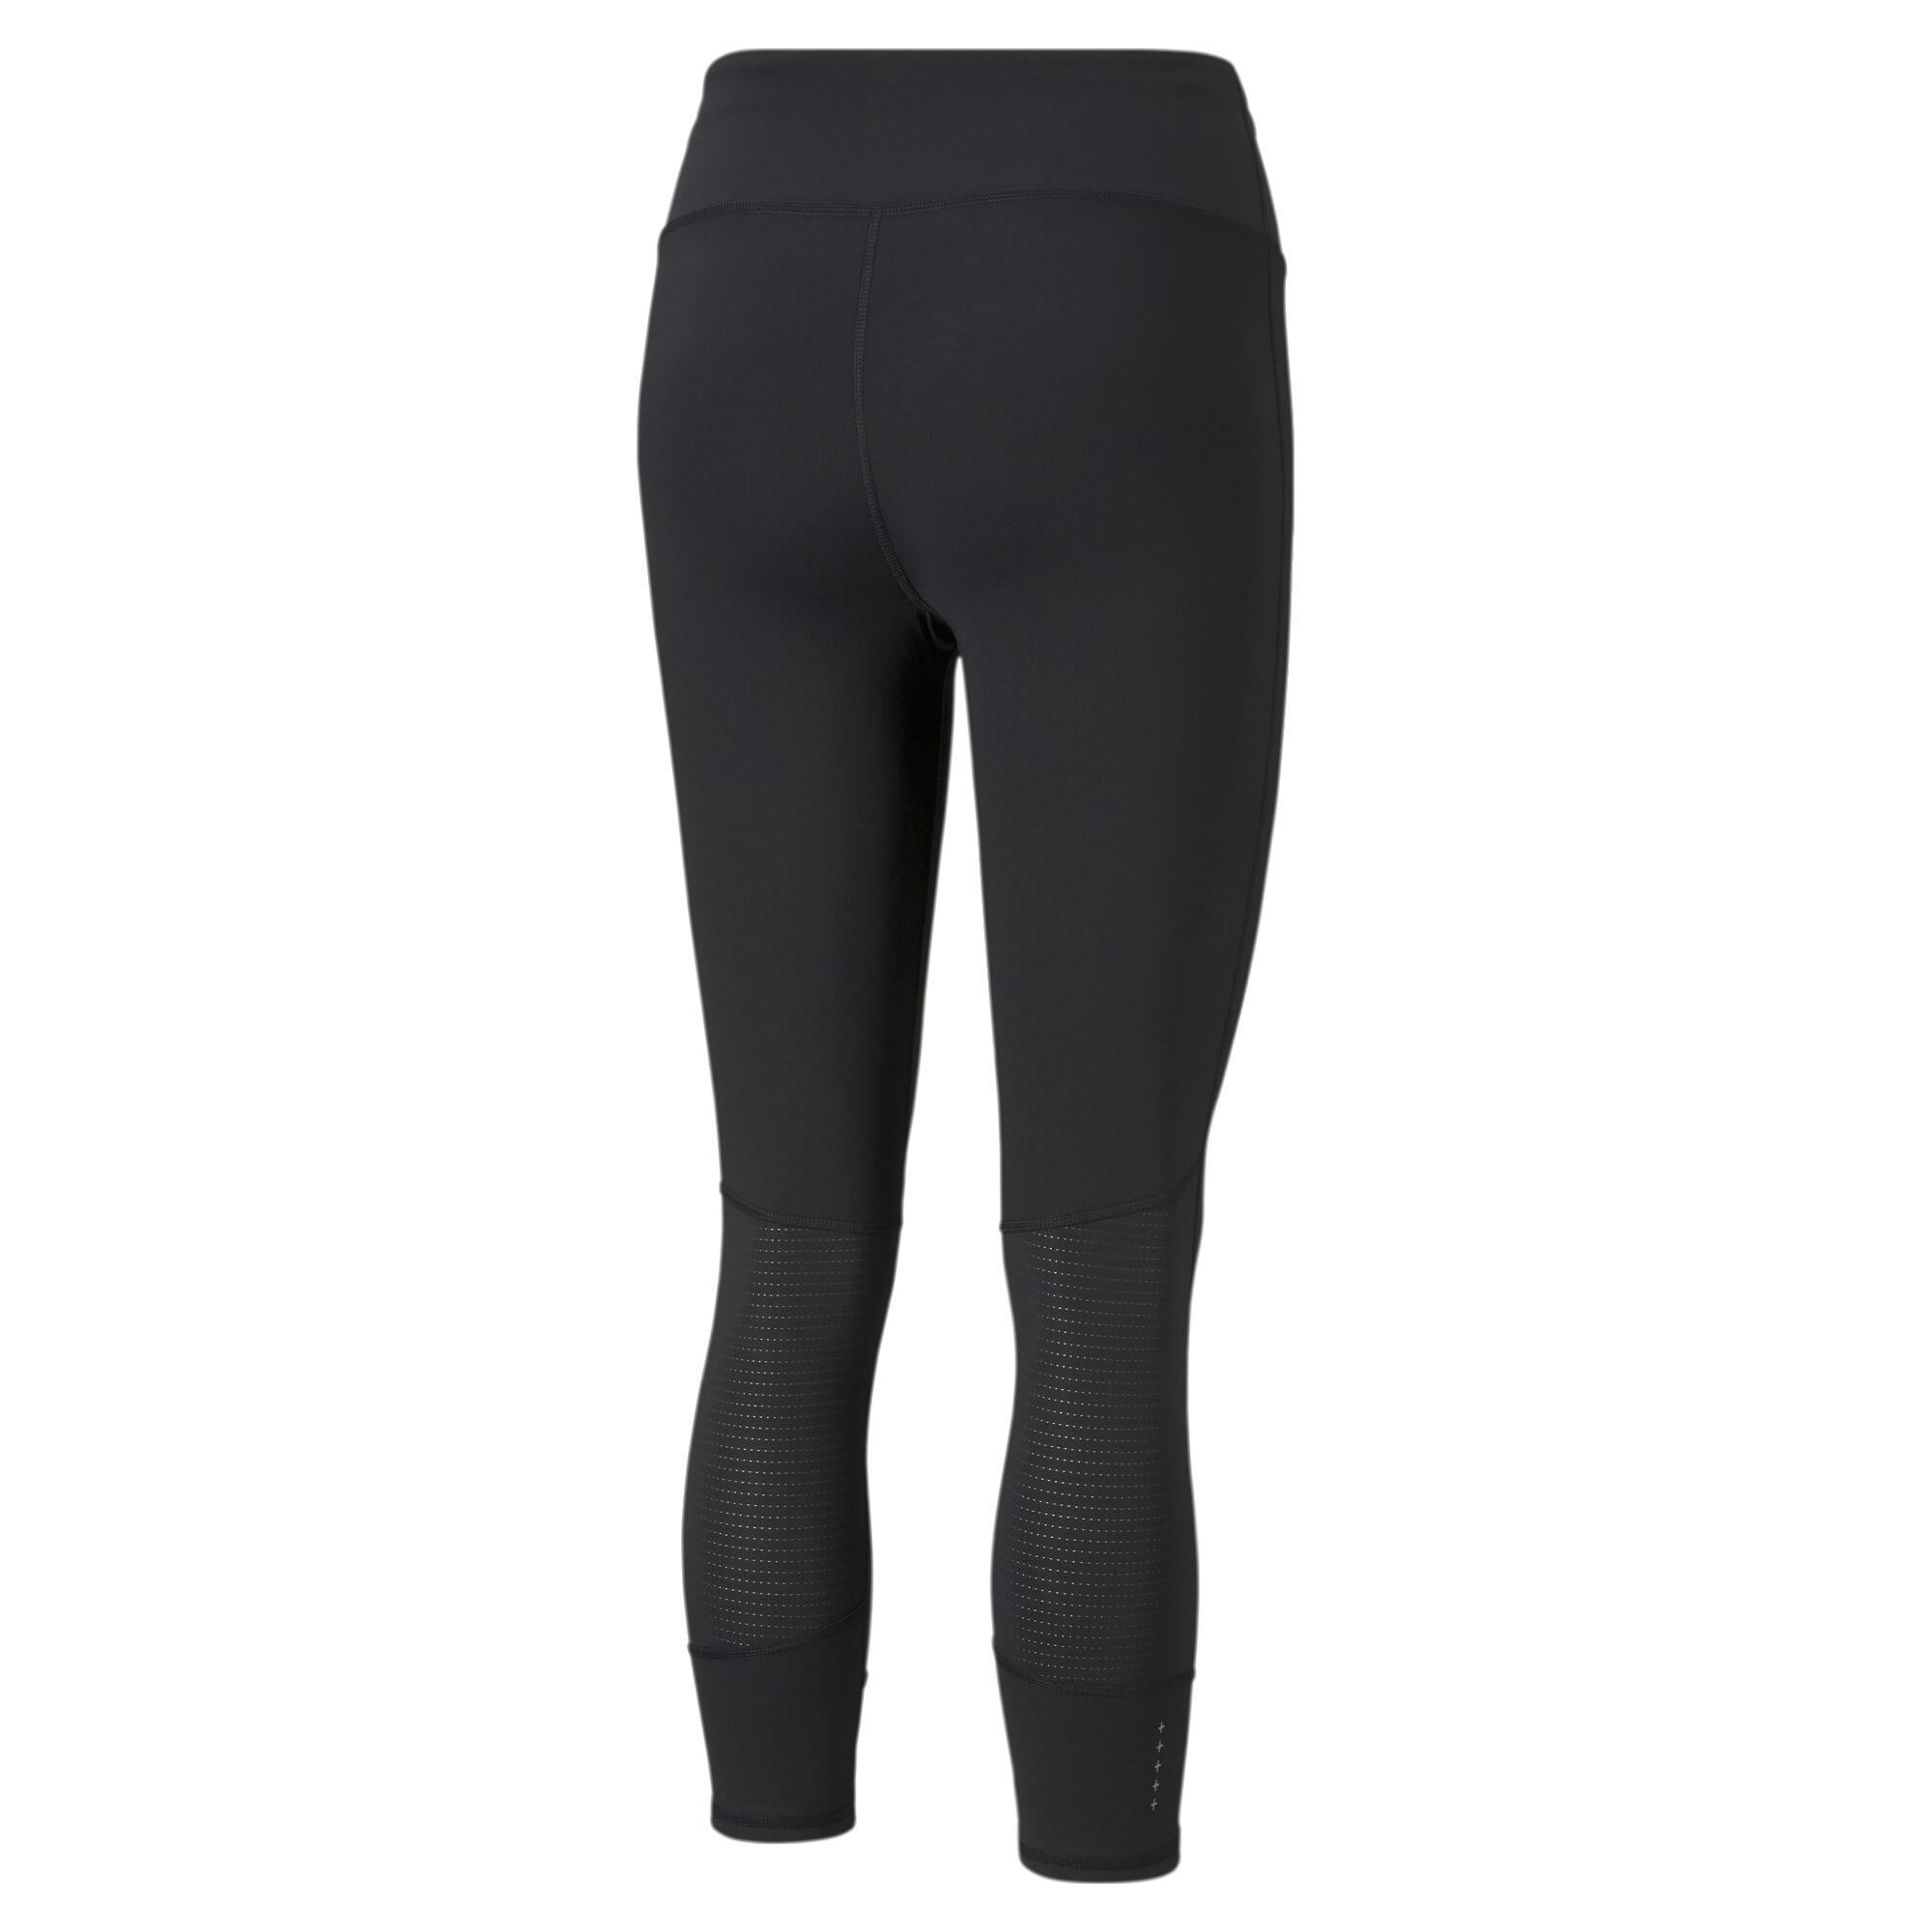 Women's PUMA Favourite 3/4 Running Leggings In Black, Size Small